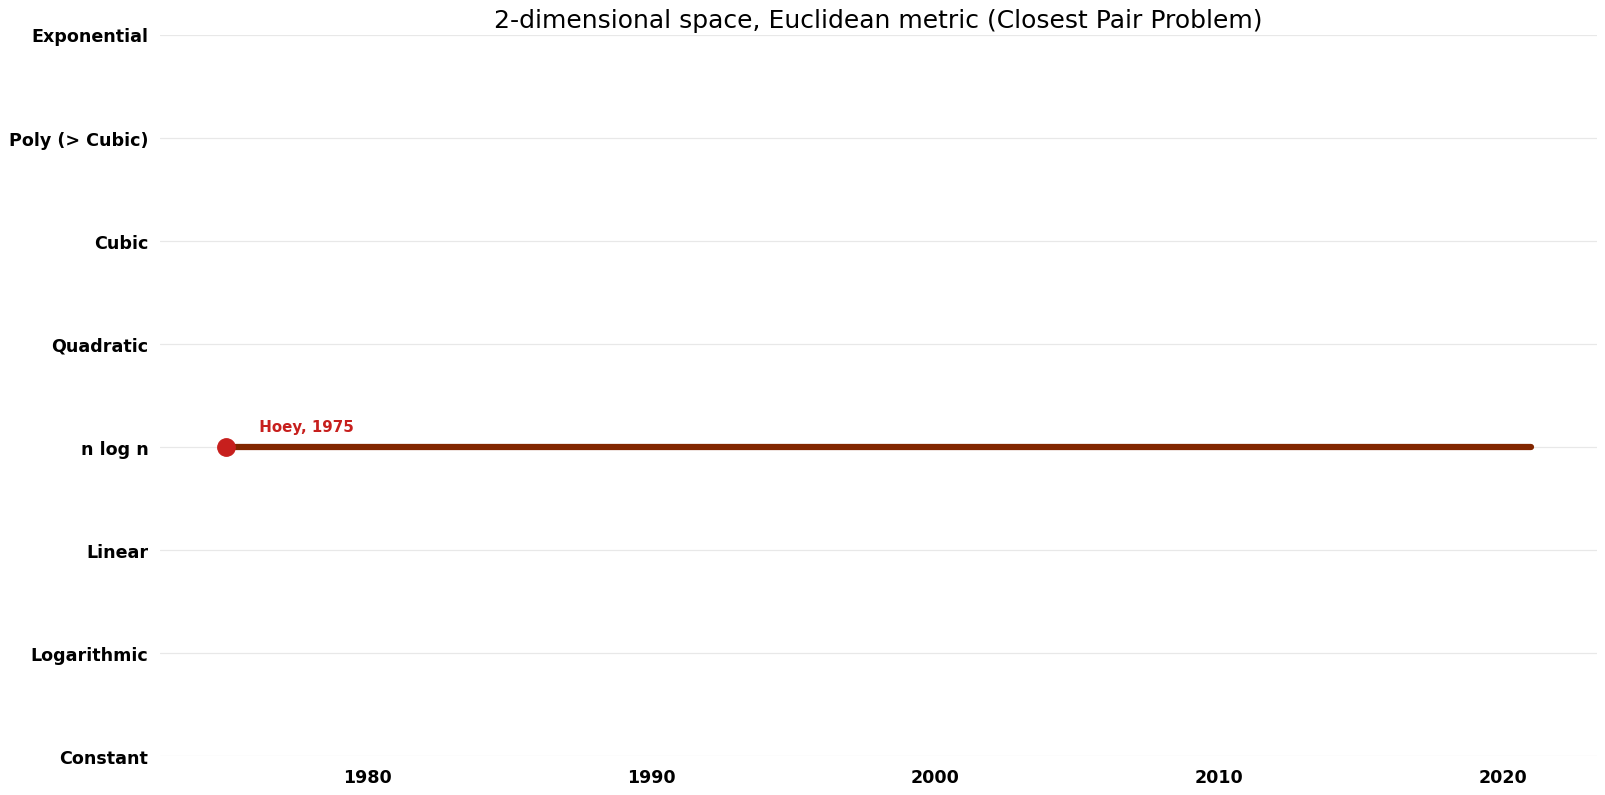 Closest Pair Problem - 2-dimensional space, Euclidean metric - Time.png